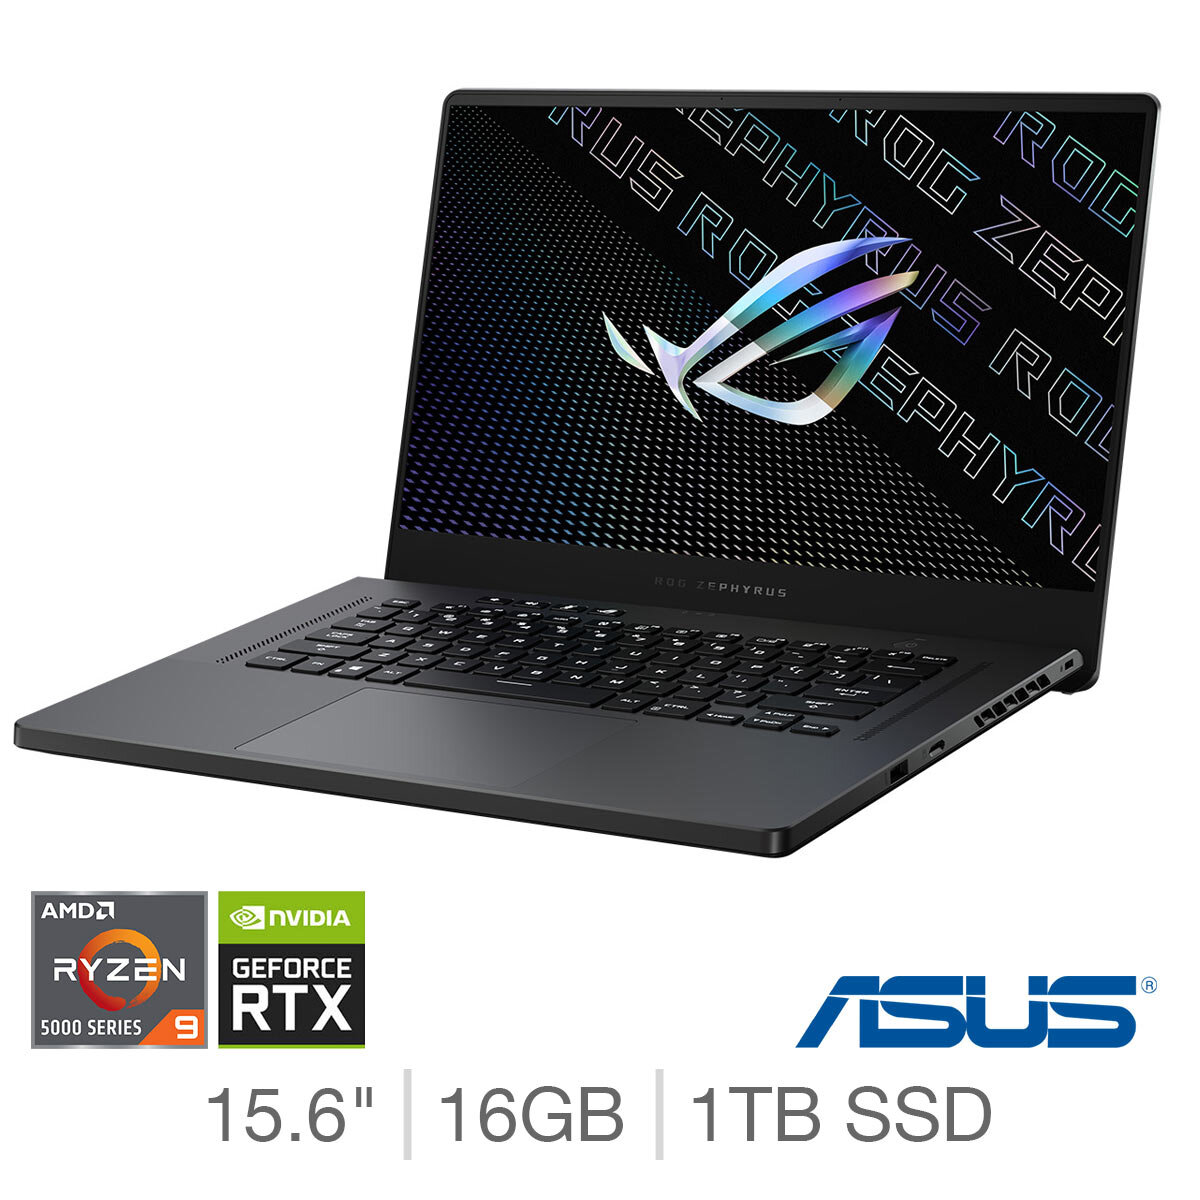 Buy ASUS ROG Zephyrus G15, AMD Ryzen 9, 16GB RAM, 1TB SSD, NVIDIA GeForce RTX 3080, 15.6 Inch Gaming Laptop, GA503QS-HN103T at Costco.co.uk